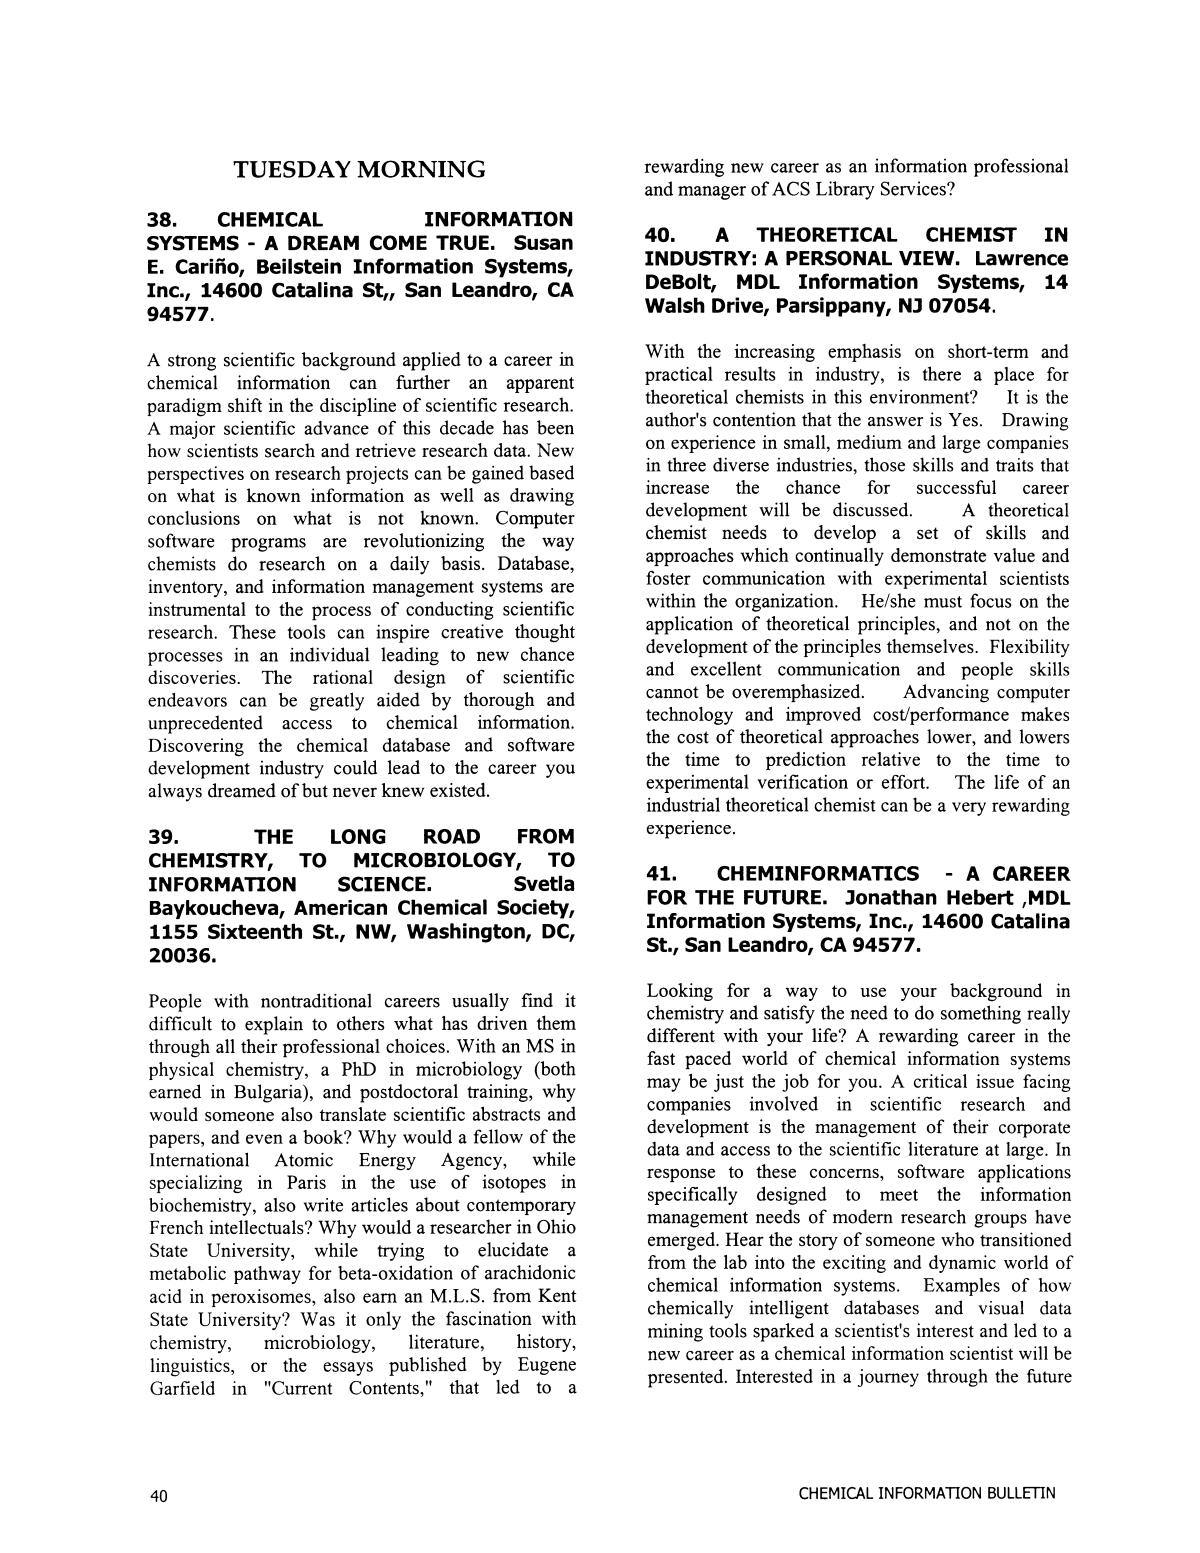 Chemical Information Bulletin, Volume 51, Number 1, Spring 1999
                                                
                                                    40
                                                